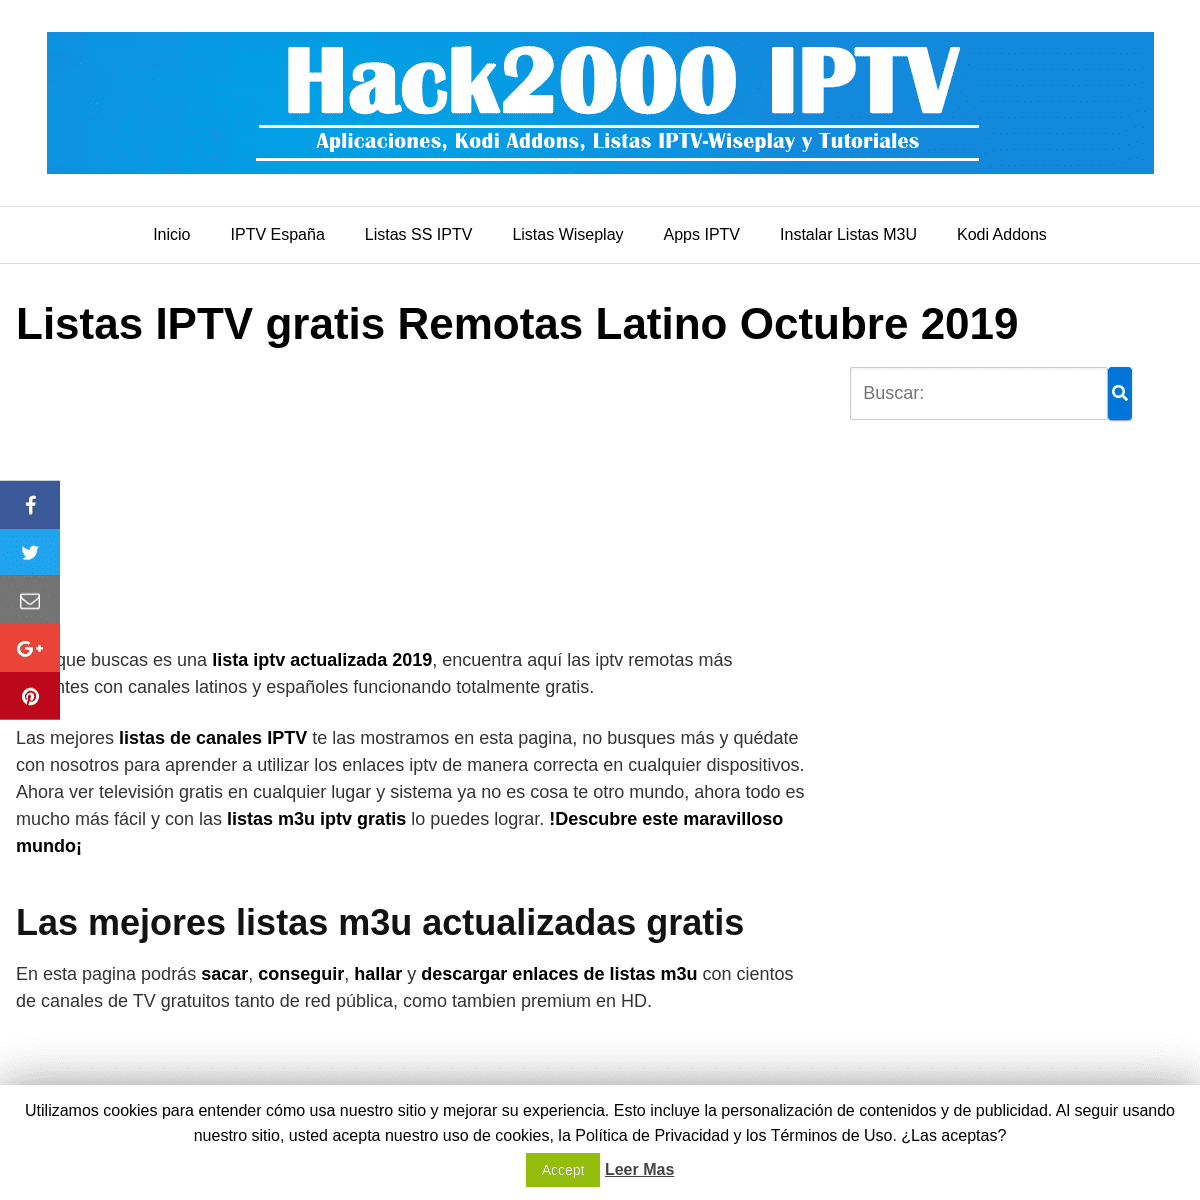 A complete backup of listas-iptv-gratis.com